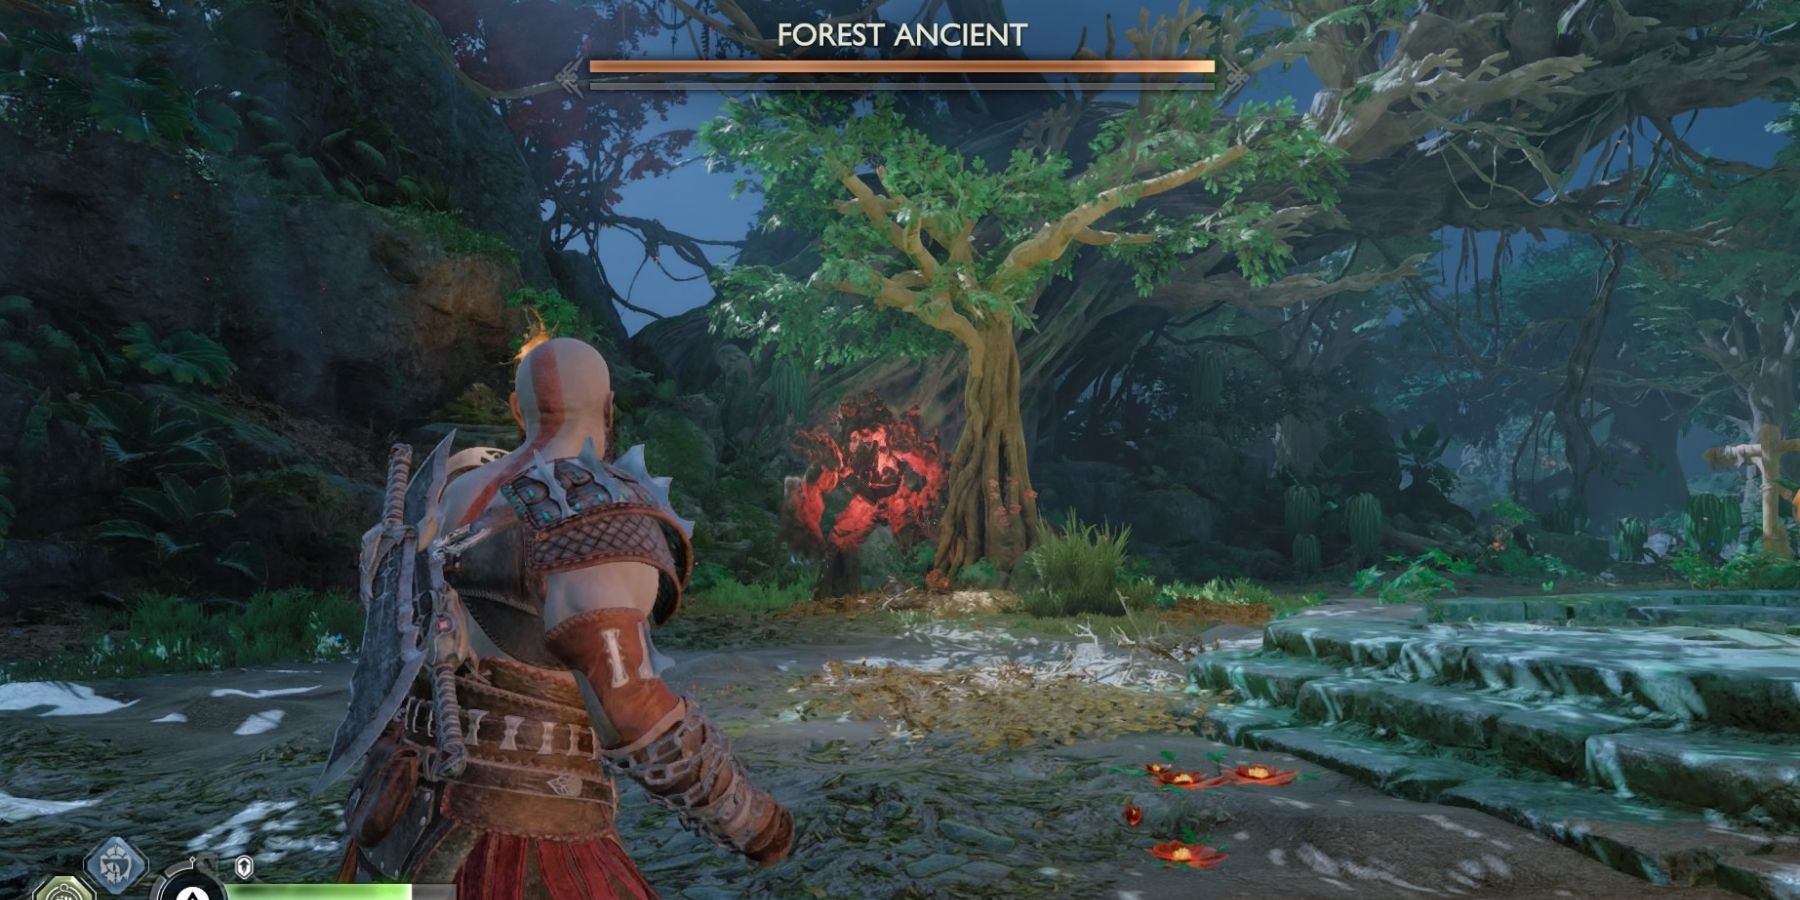 Kratos faces the Forest Ancient in God of War Ragnarok